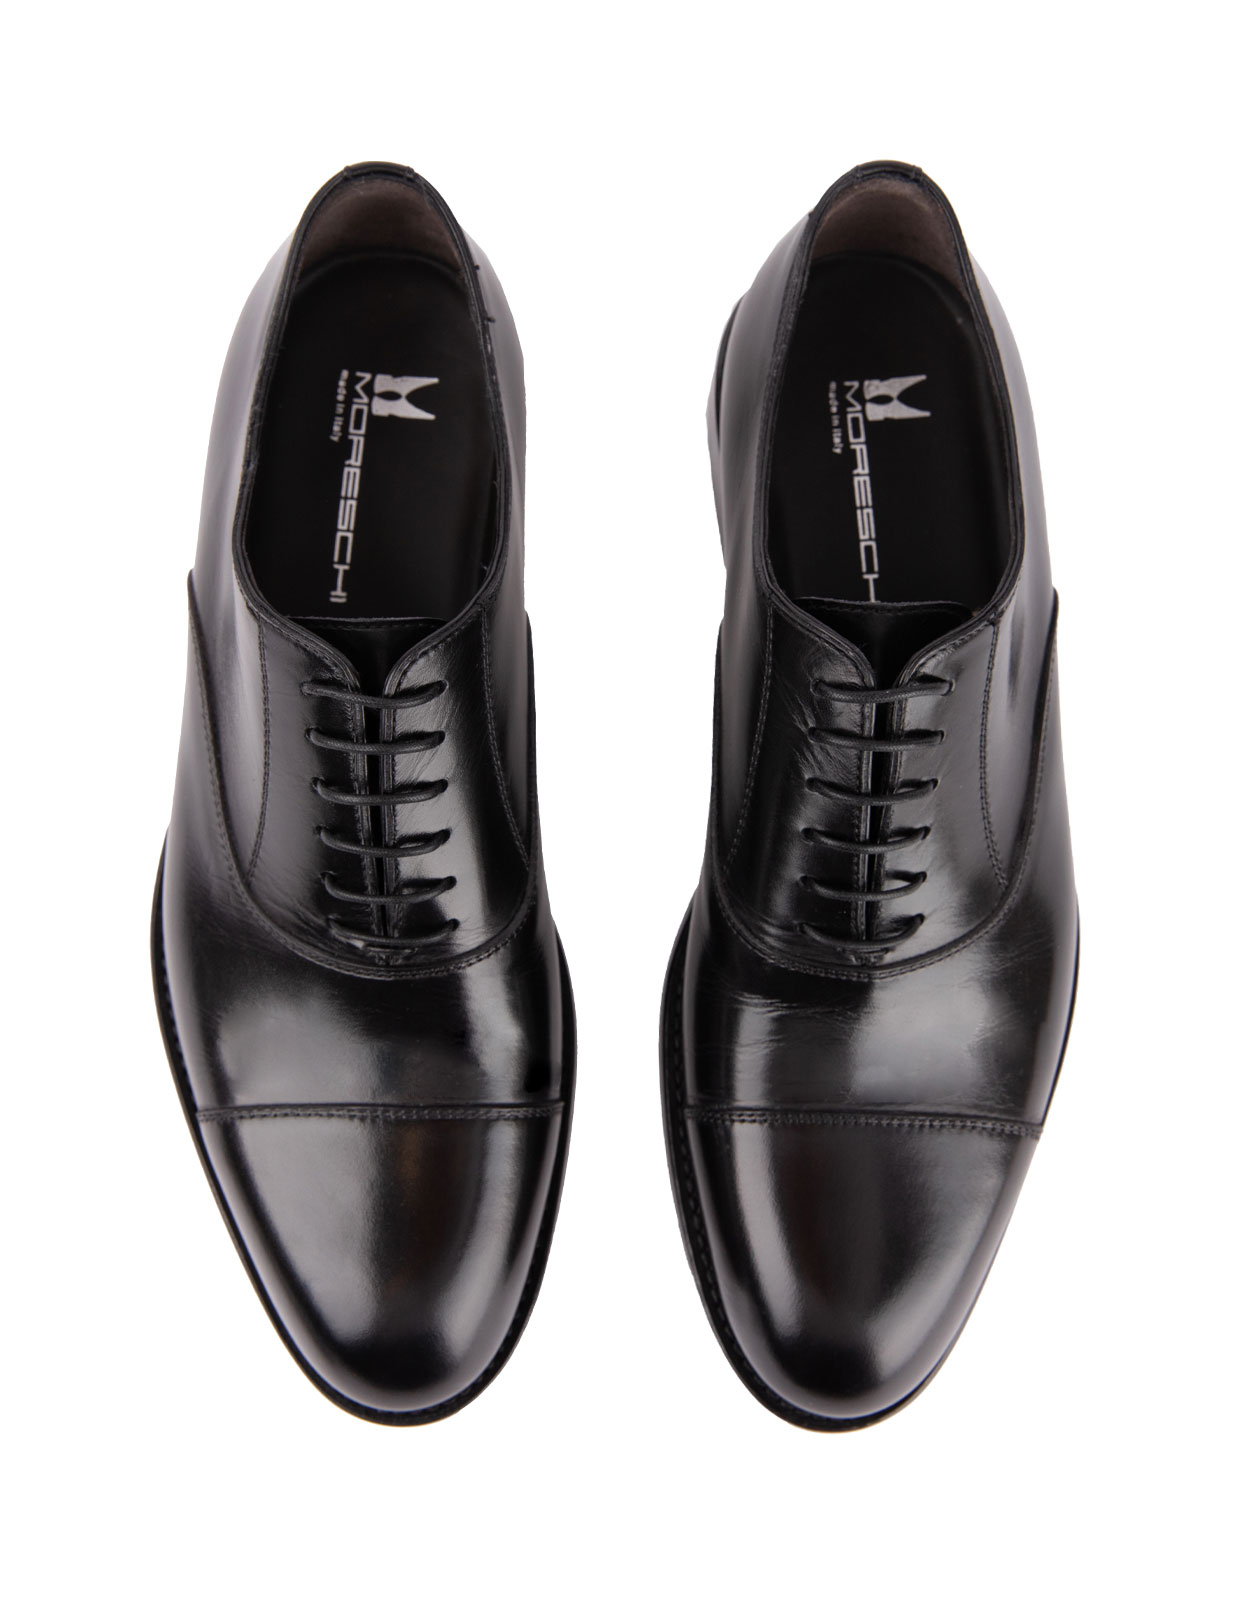 Cleveland Oxford Shoes Black Stl 7